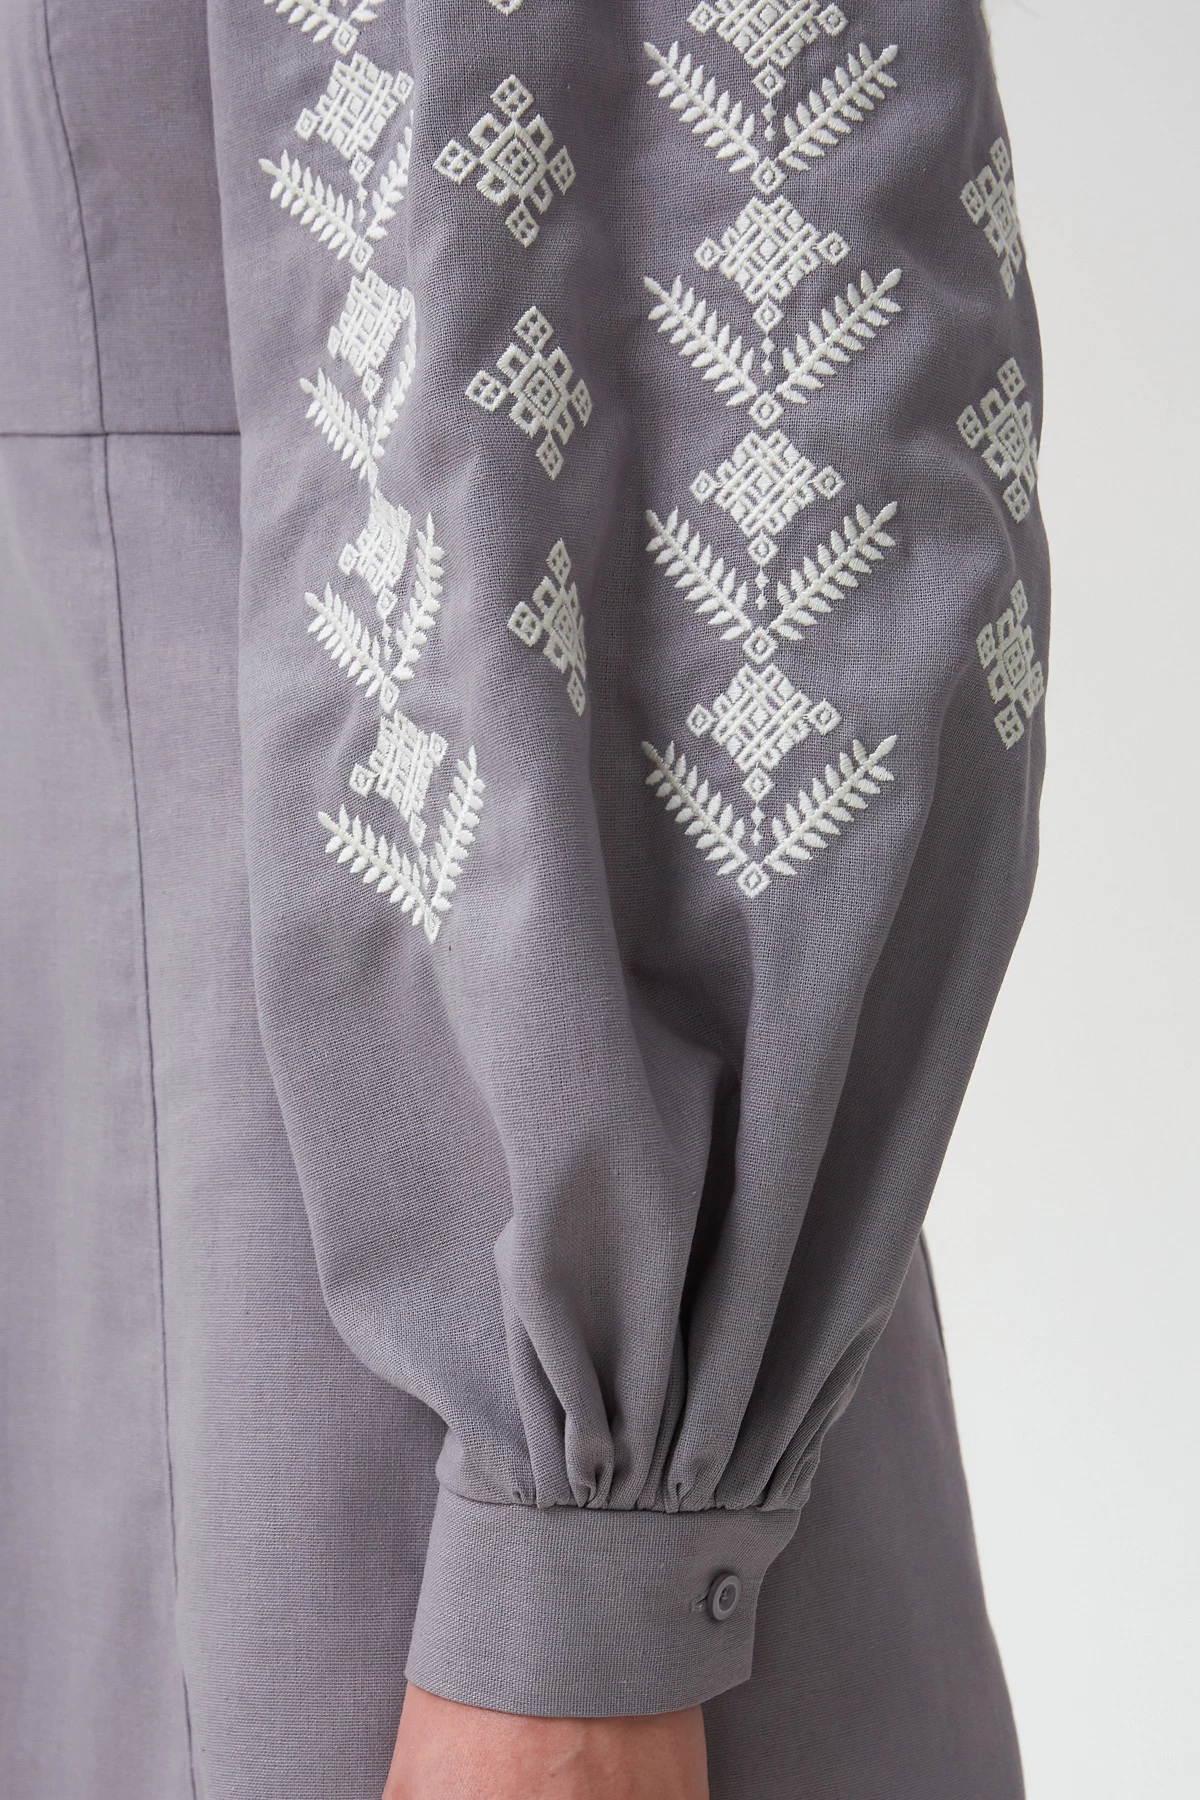 Grey linen vyshyvanka dress with rhombus embroidery, photo 5